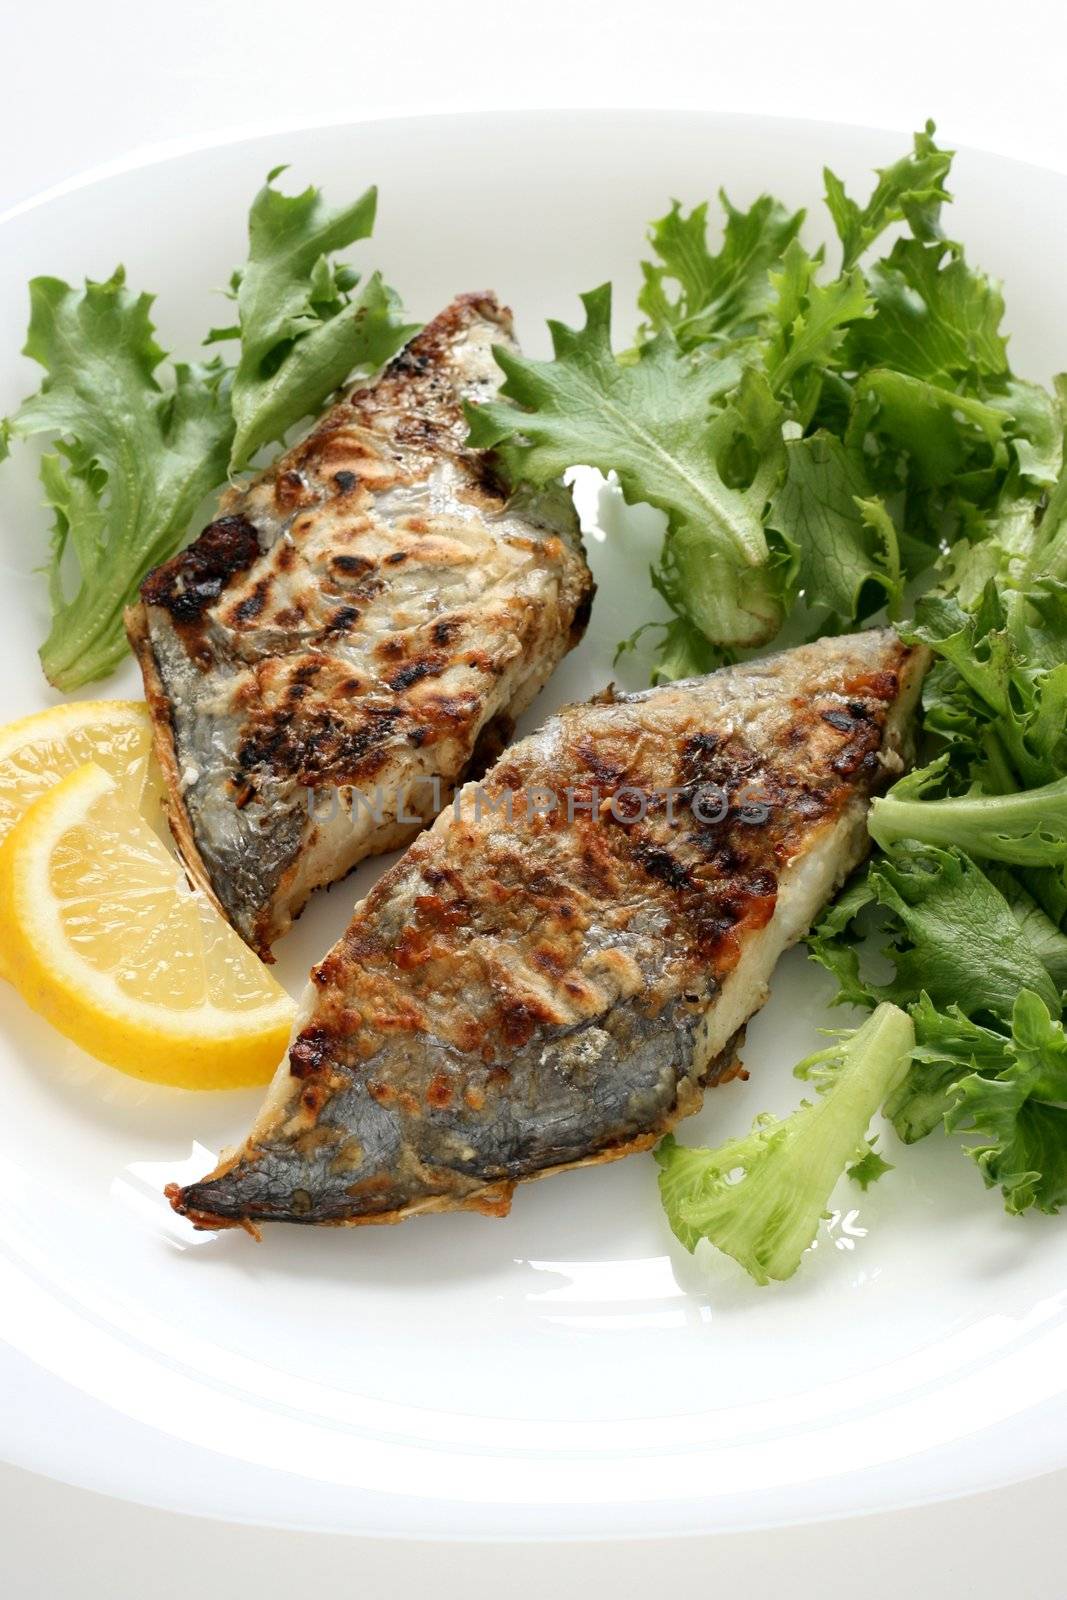 fried flounder with lemon and lettuce by nataliamylova